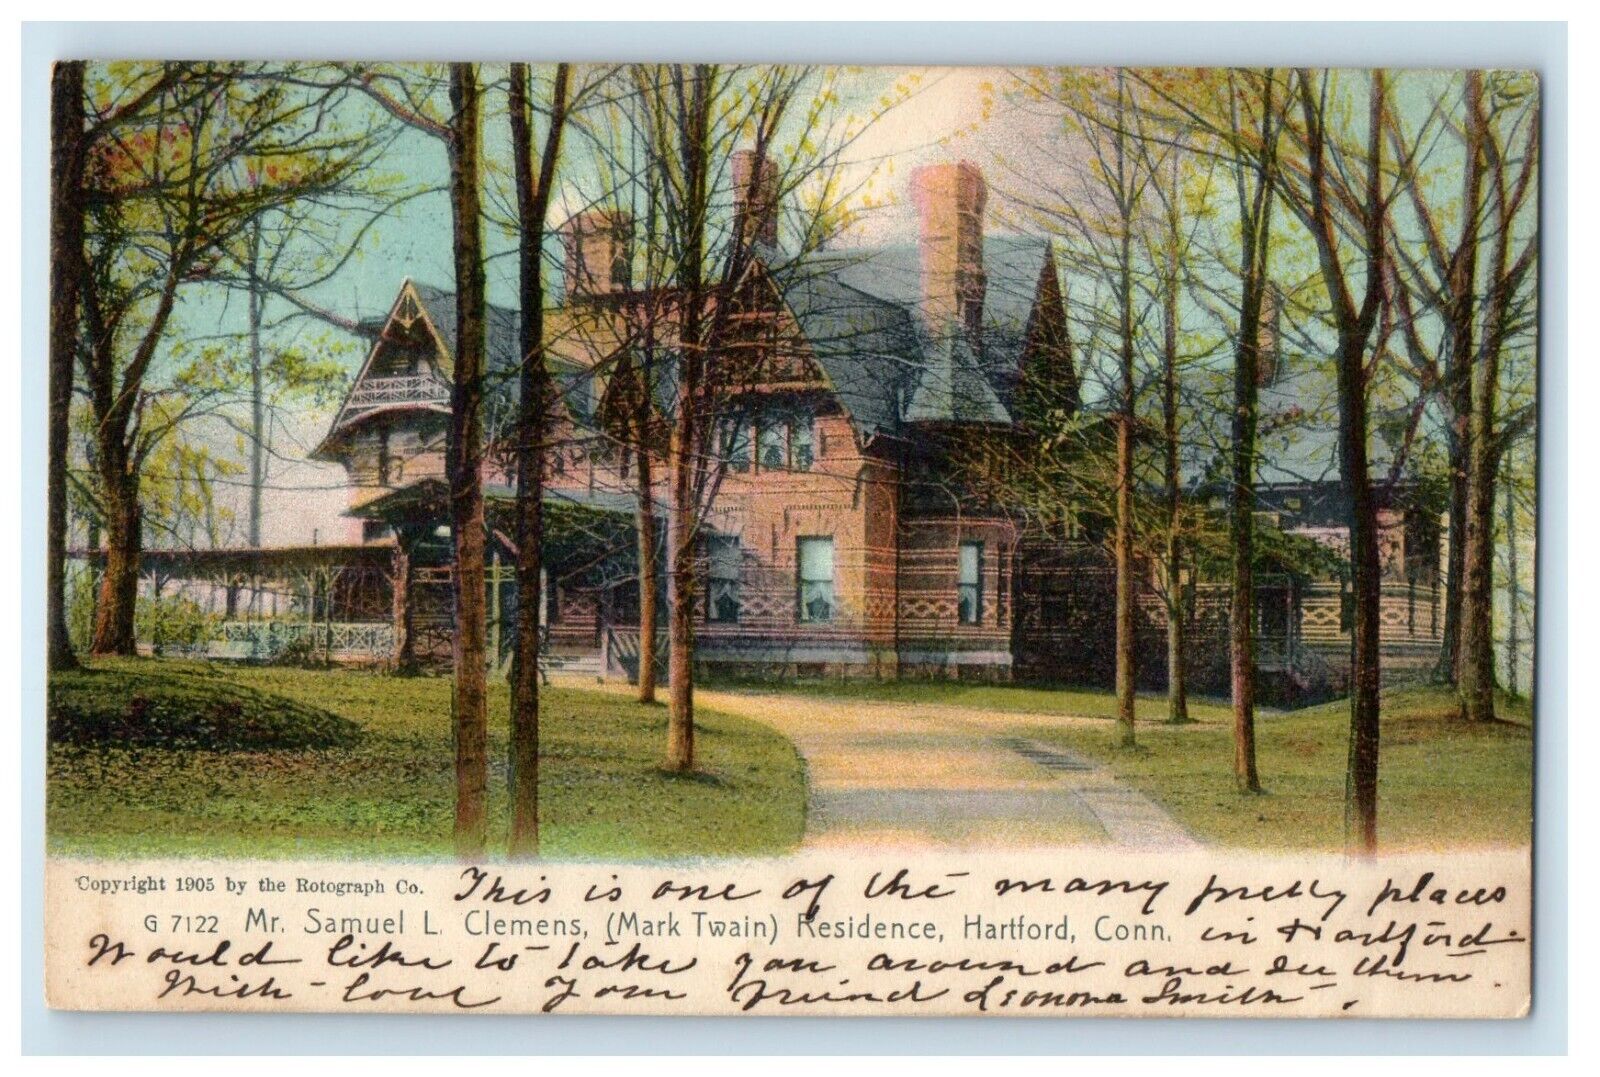 c1905 Mr. Samuel L. Clemens Mark Twain Residence Hartford CT Rotograph Postcard